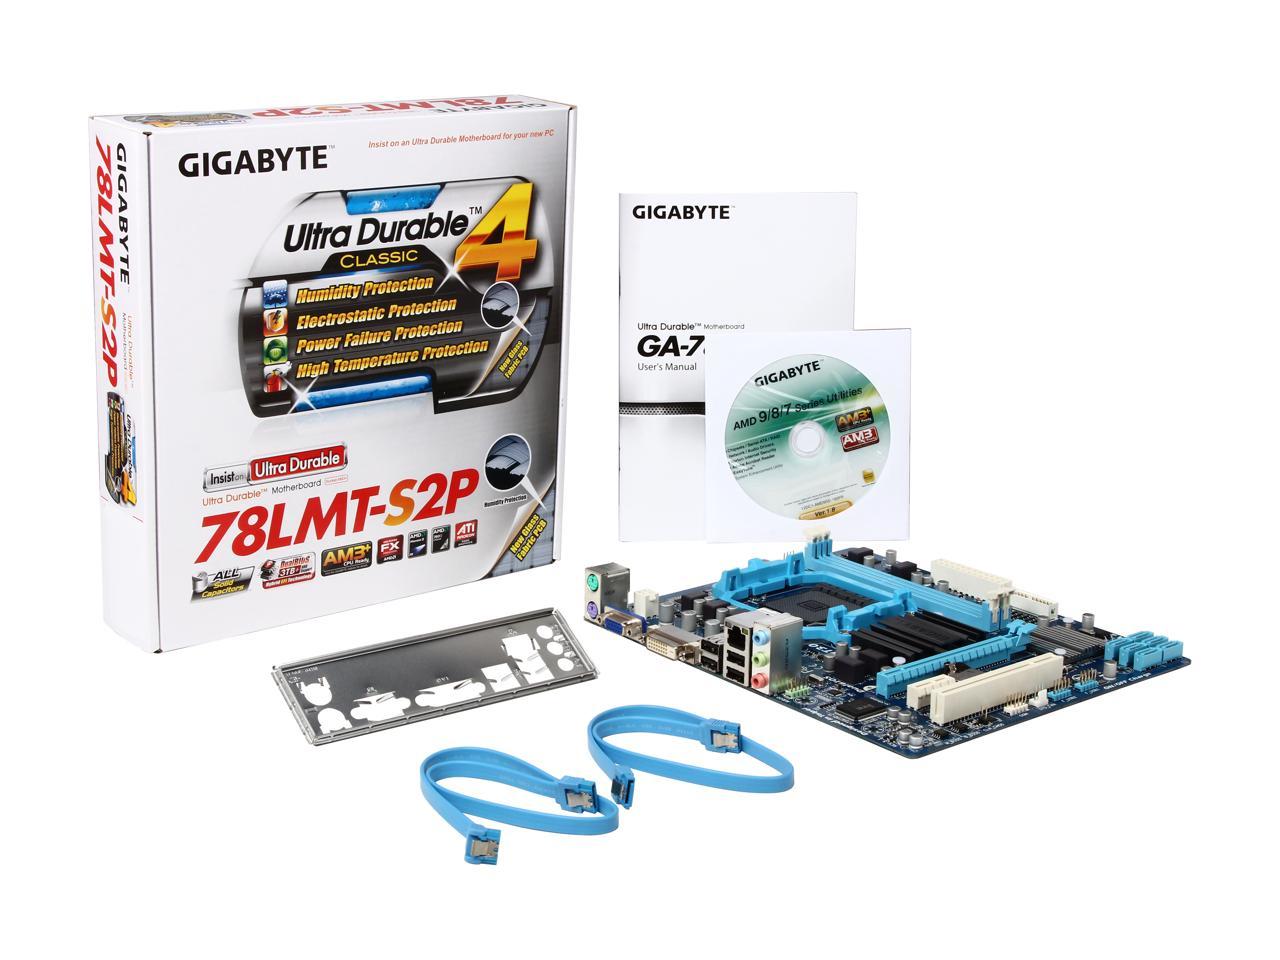 GIGABYTE GA-78LMT-S2P(rev 5.1) AM3+ Micro ATX AMD Motherboard 